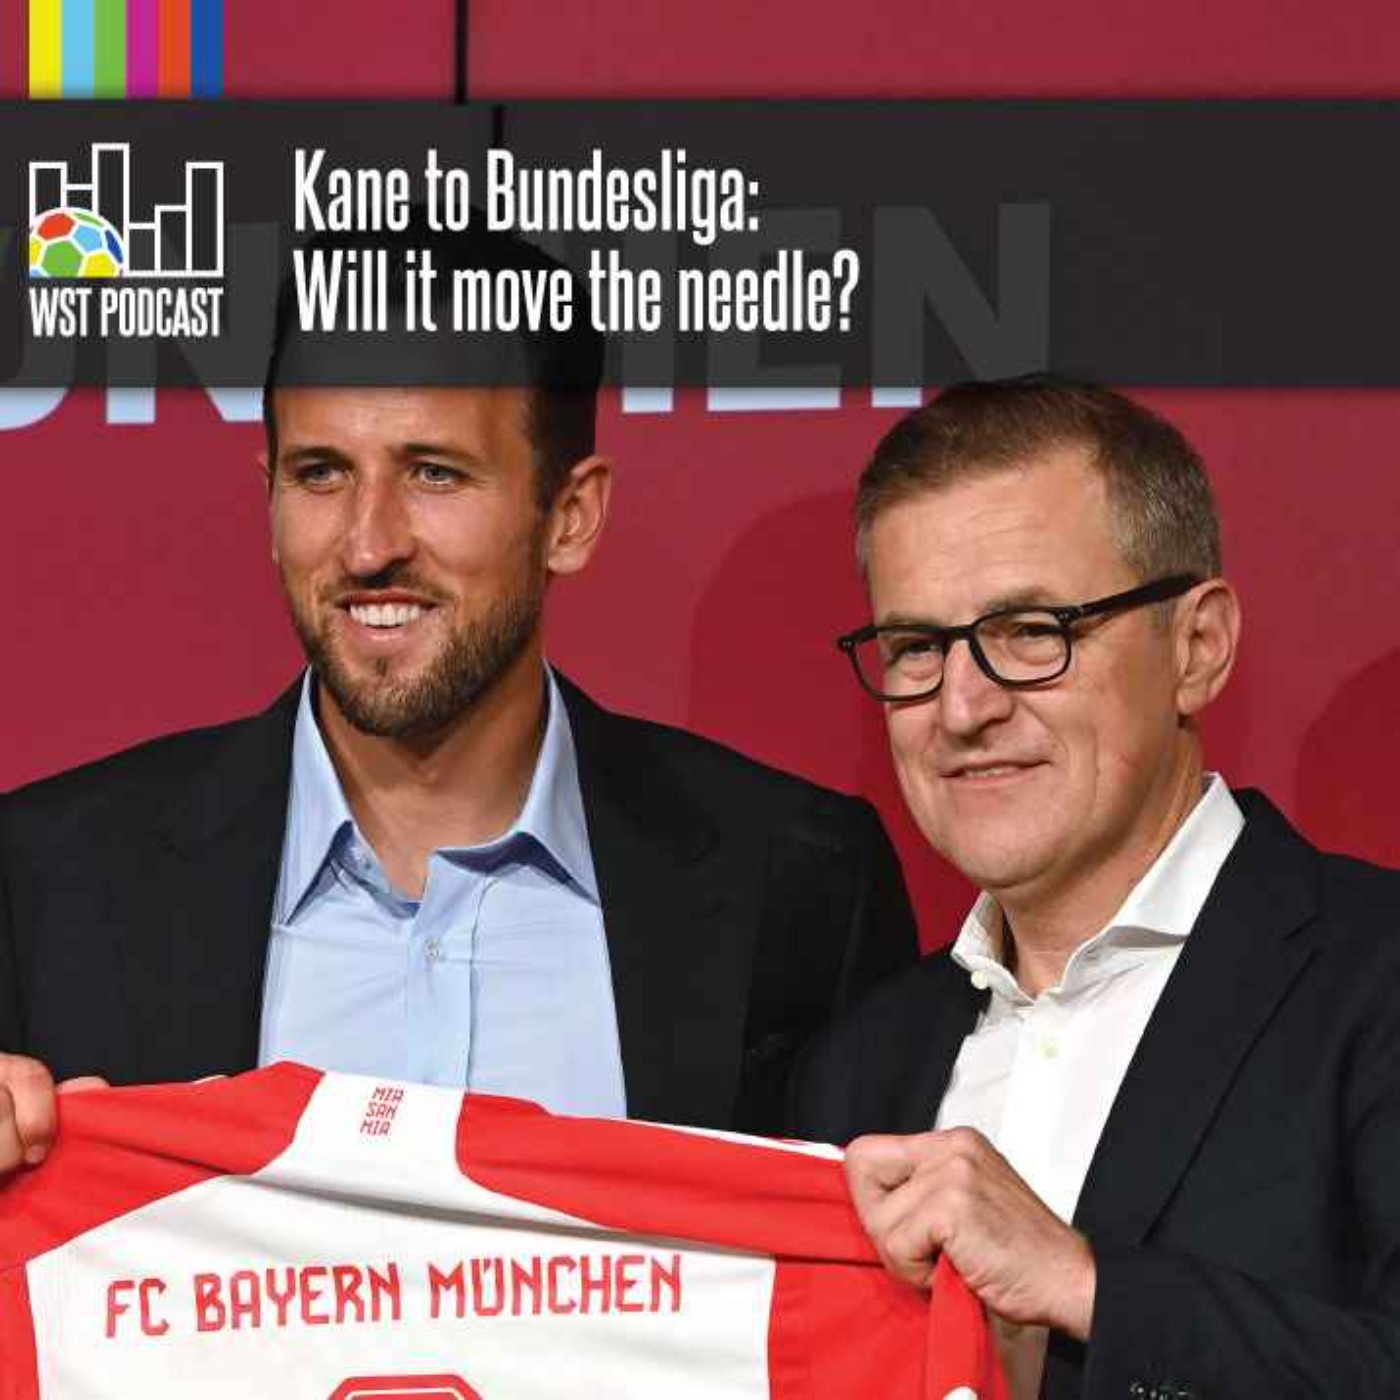 Kane to Bundesliga: Can ESPN move the needle?